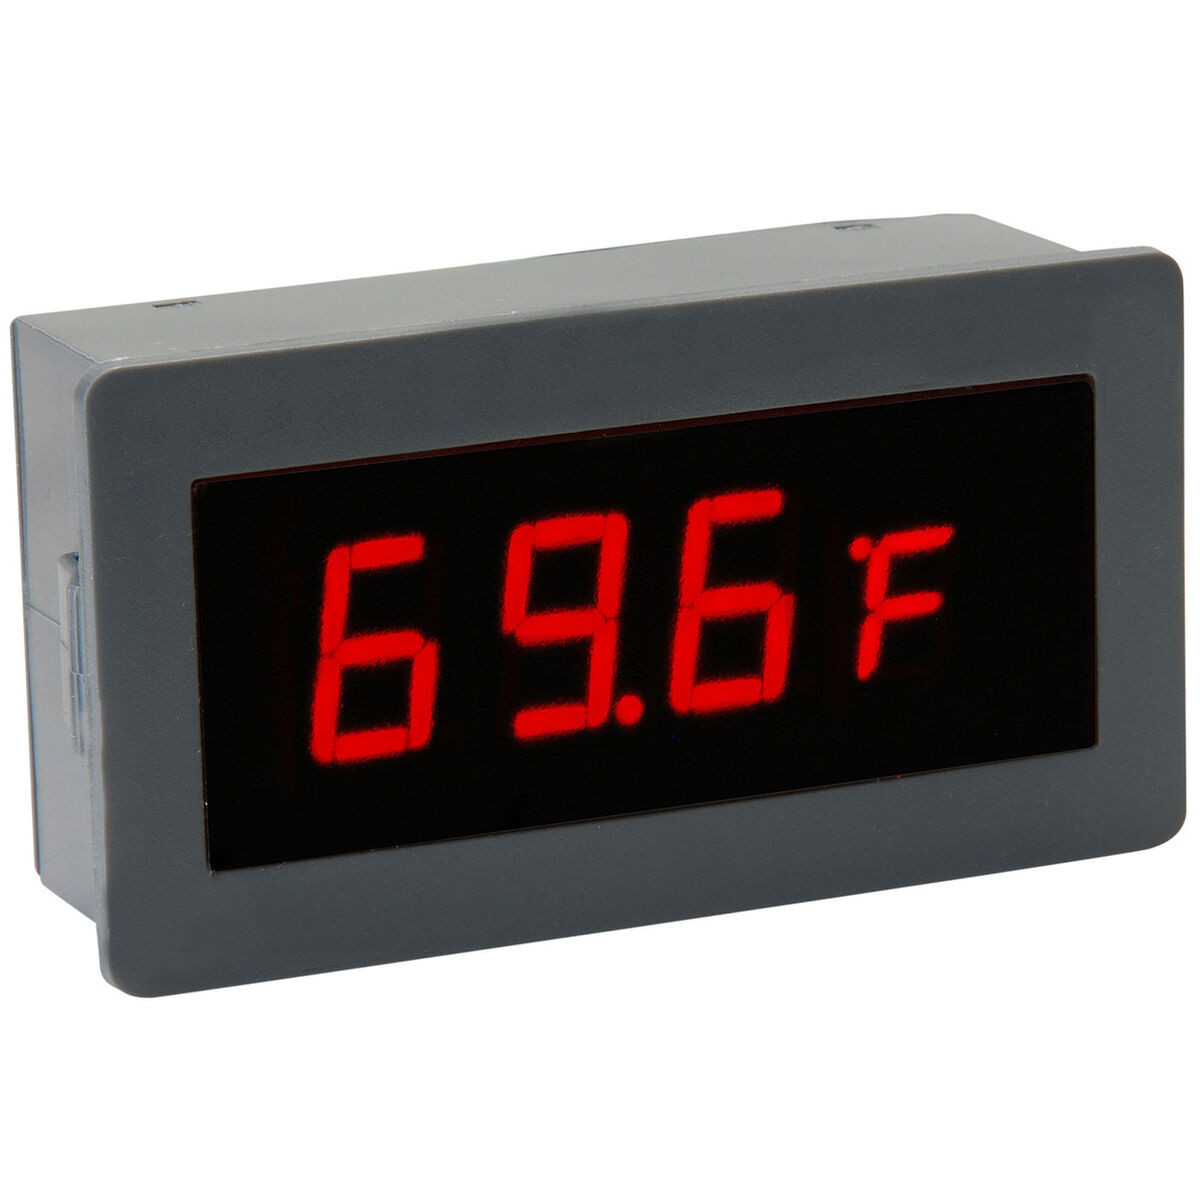 ME-TM11123 Red Digital Thermometer LED Temperature Display